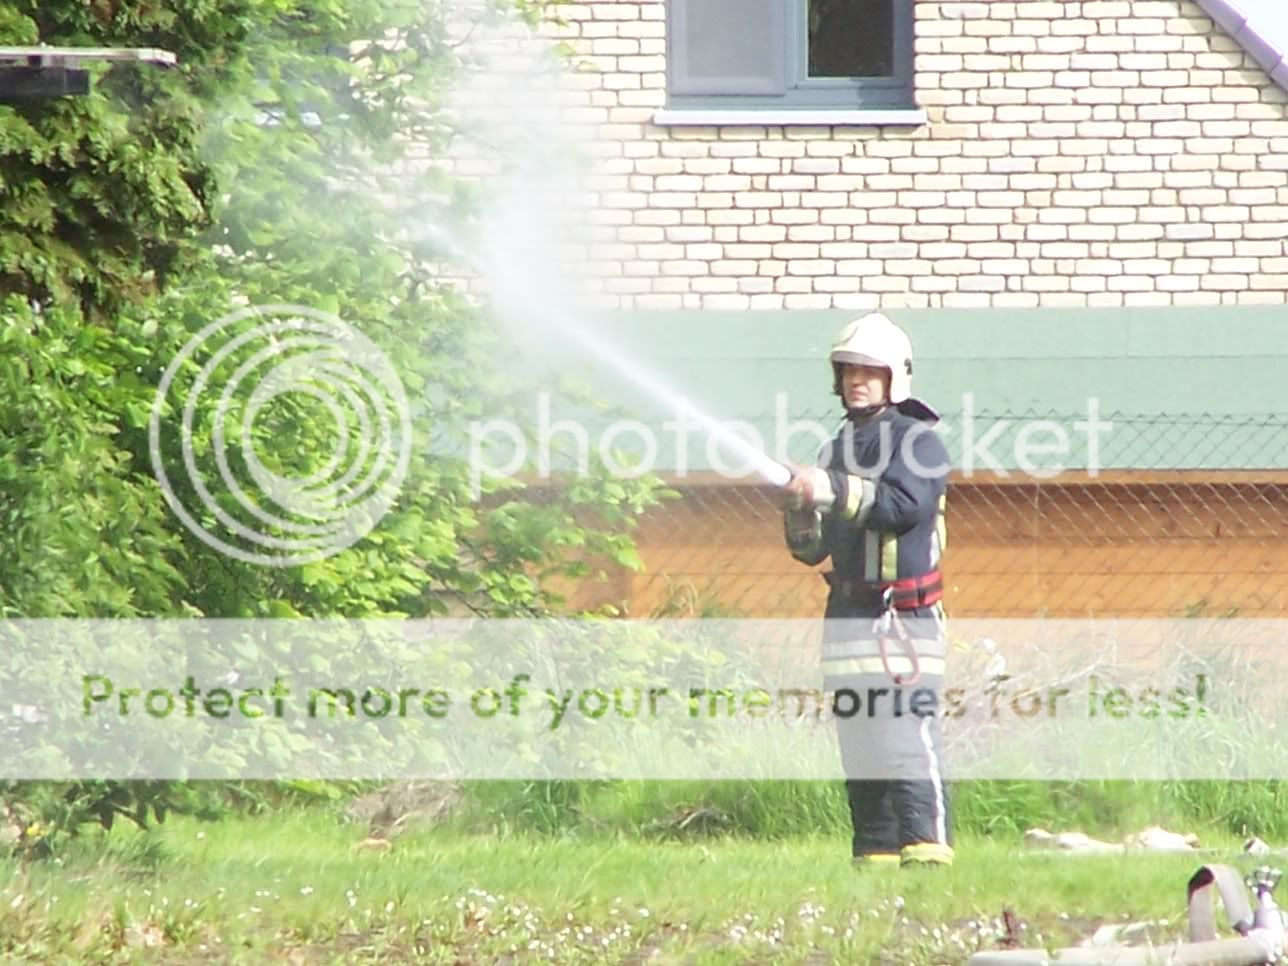 Brandweer oefening : binnen brand (+foto's) Afbeelding582